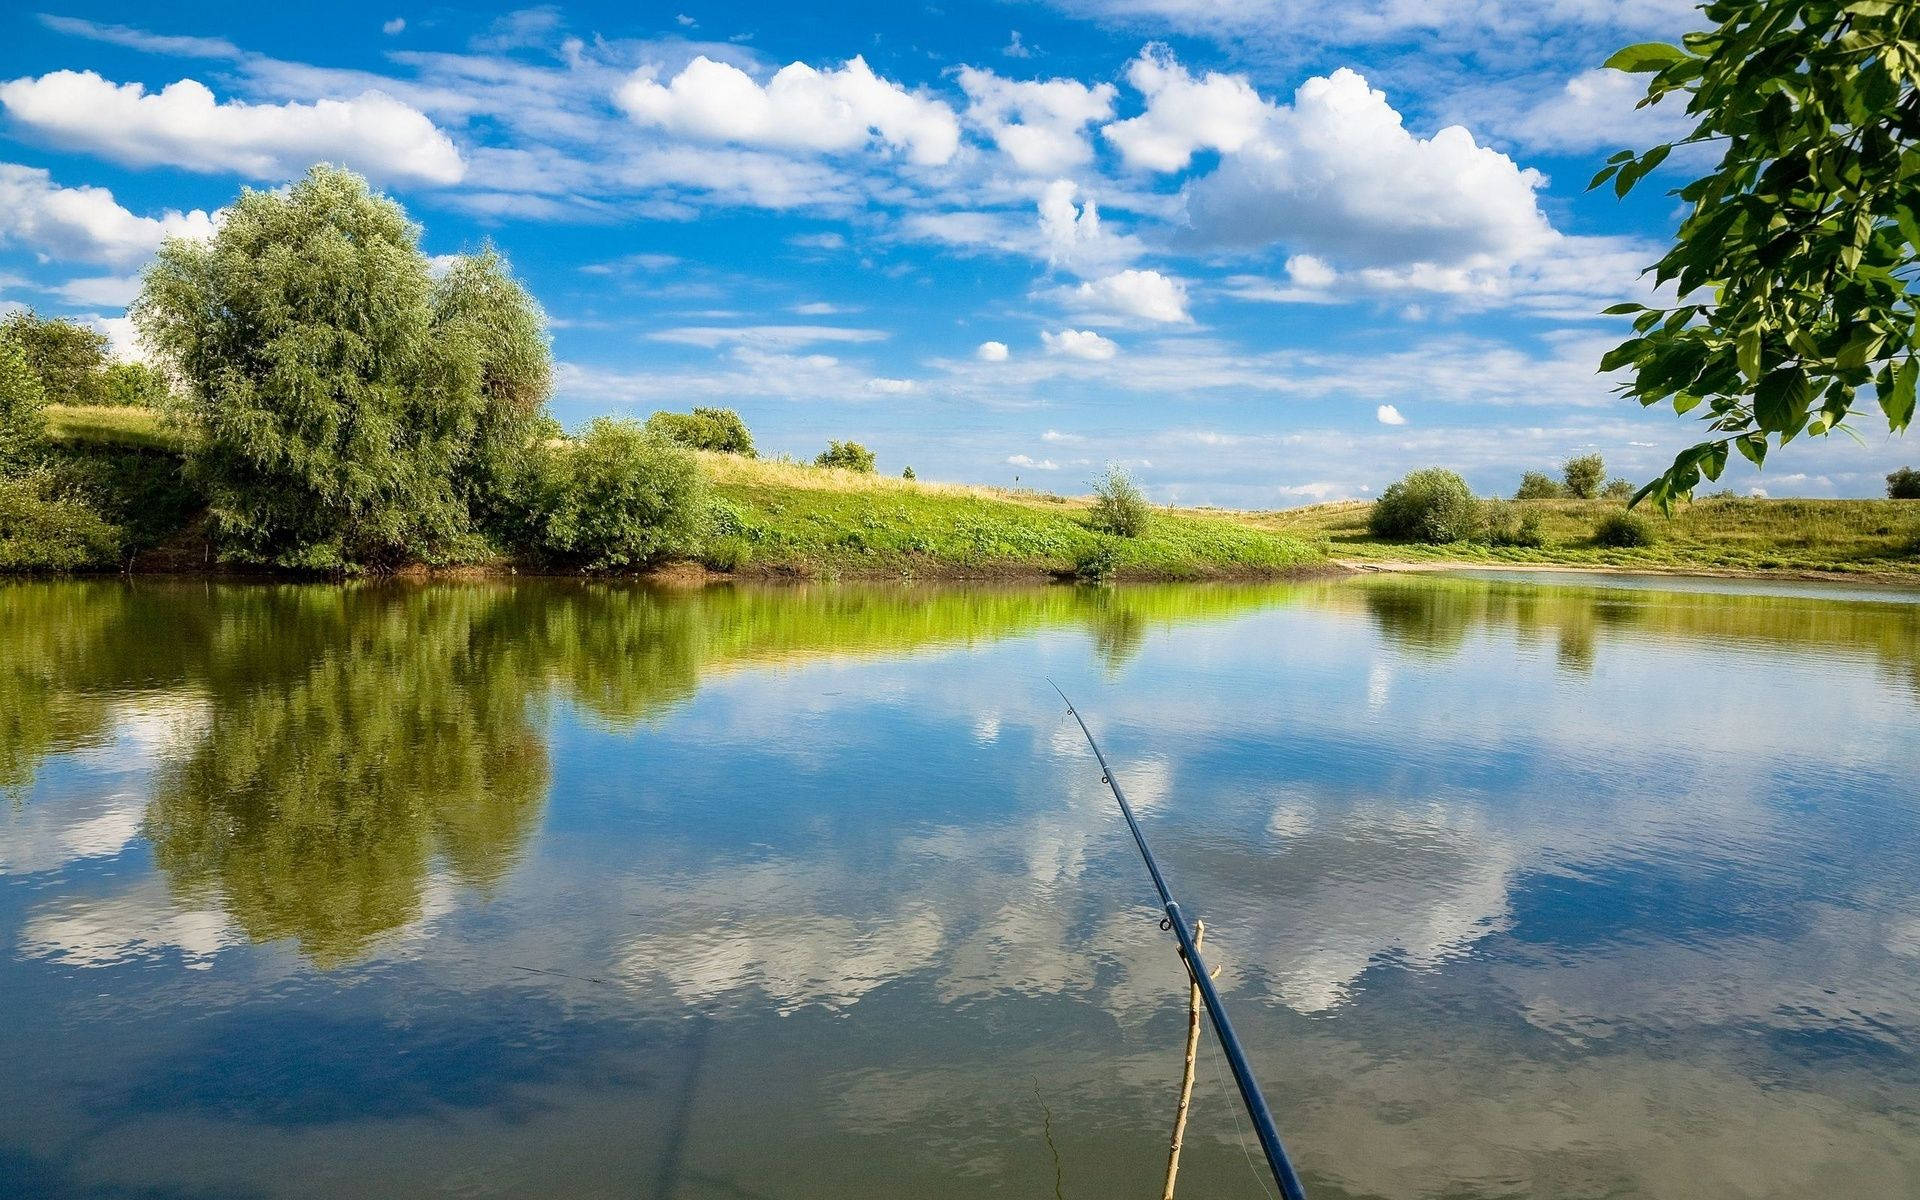 Enjoying peace and serenity at a lake with a fishing rod Wallpaper